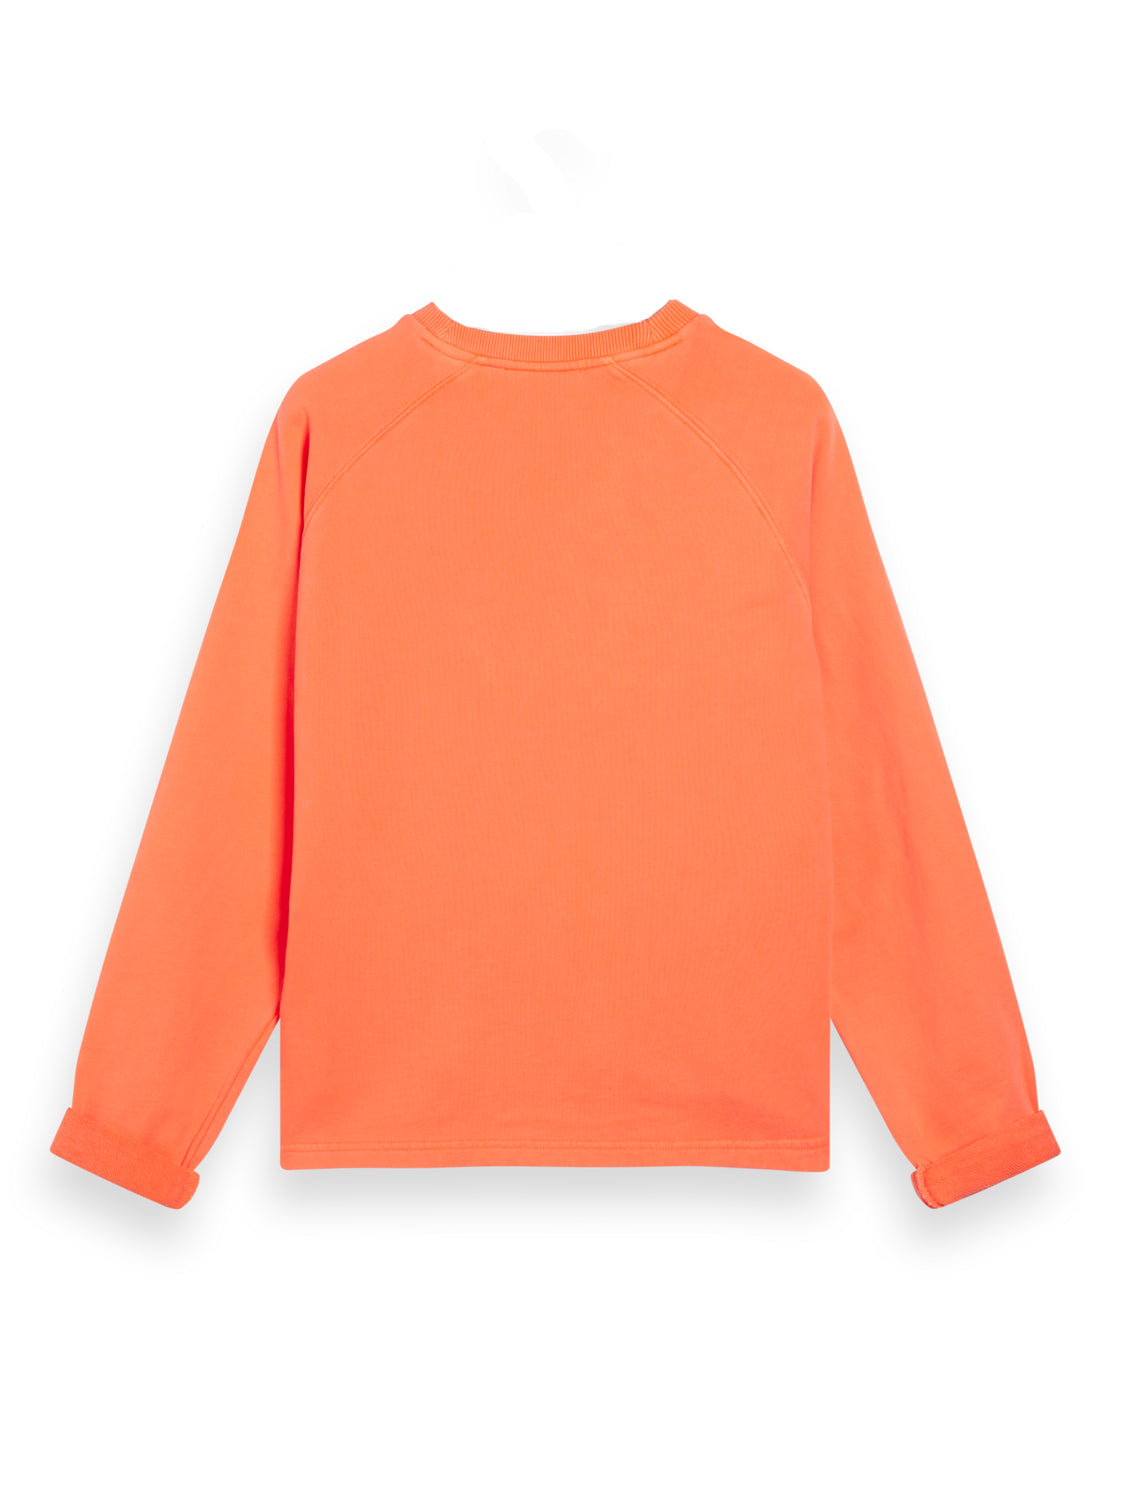 Neon Orange Sweatshirt